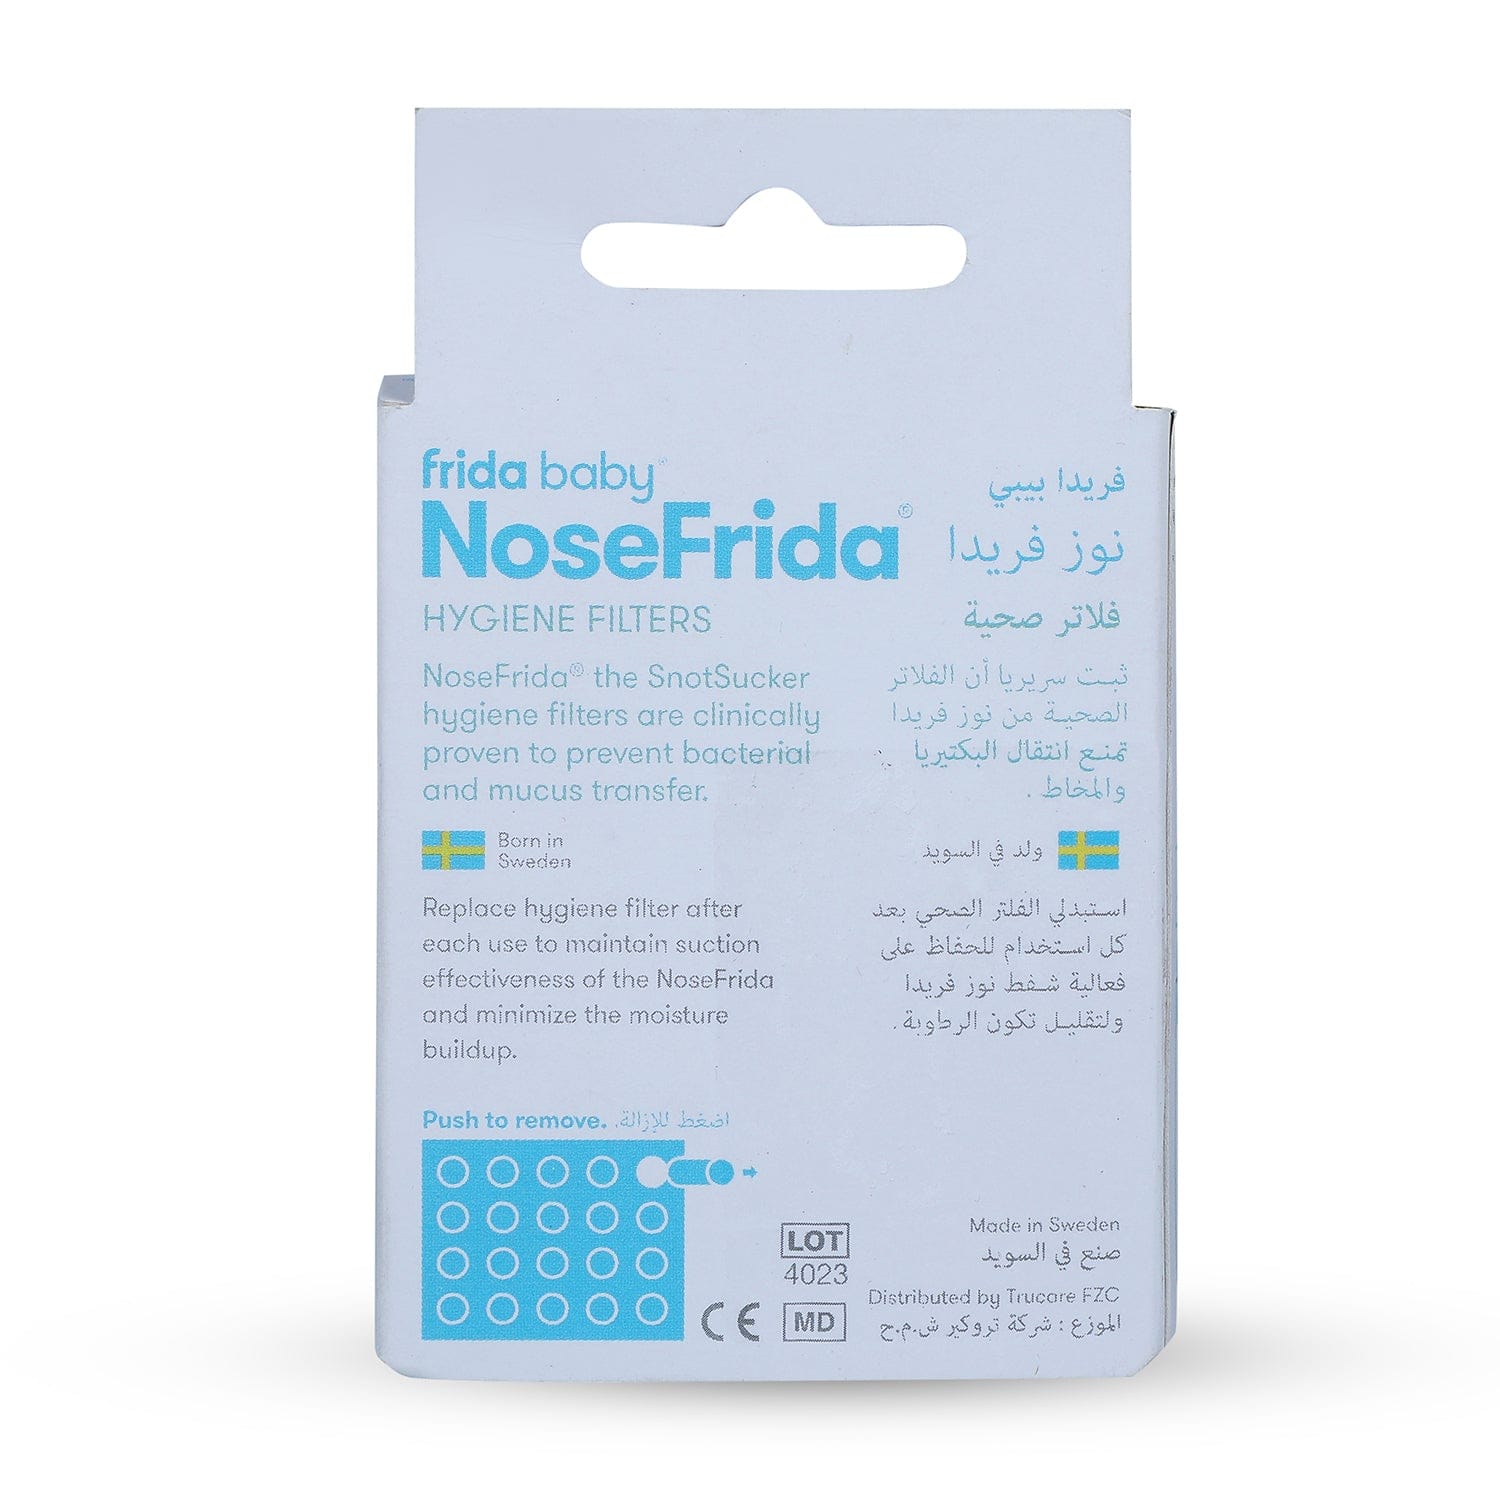 FridaBaby Nosefrida Hygiene Filters For Stuffy Nose - 20 filters